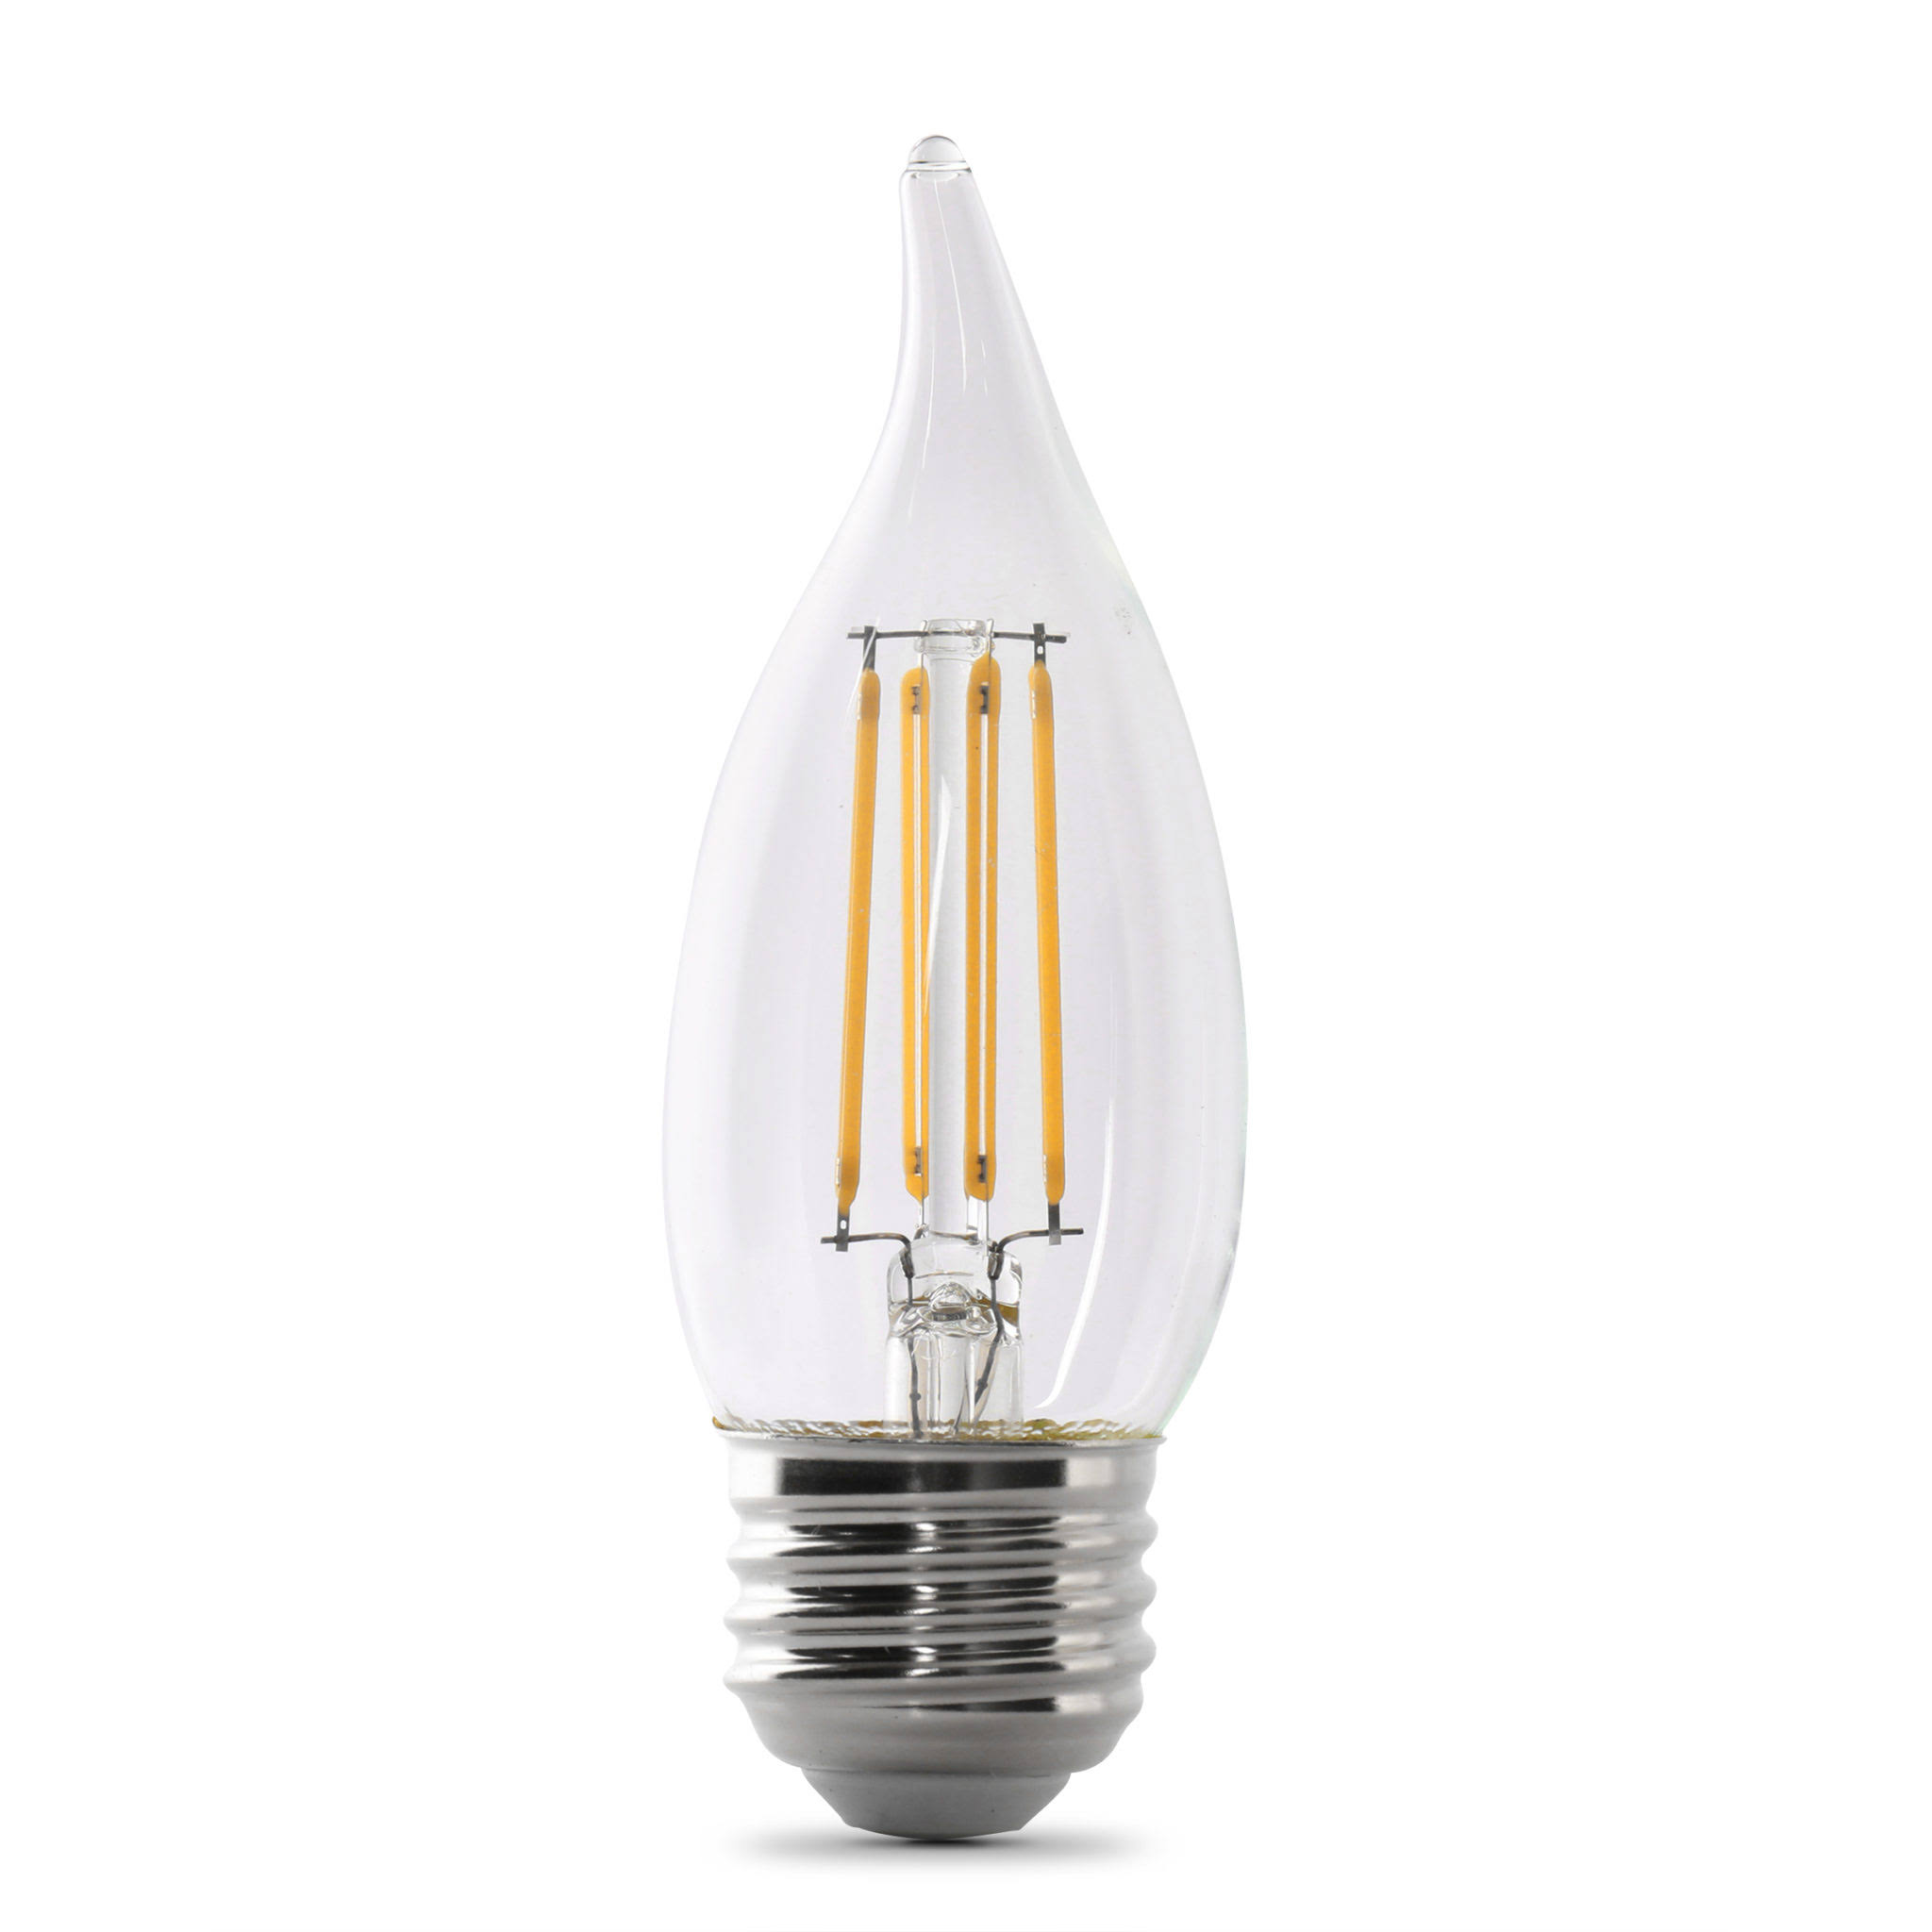 Feit Electric Enhance Light Bulbs, LED, Daylight, 3.3 Watts - 2 light bulbs